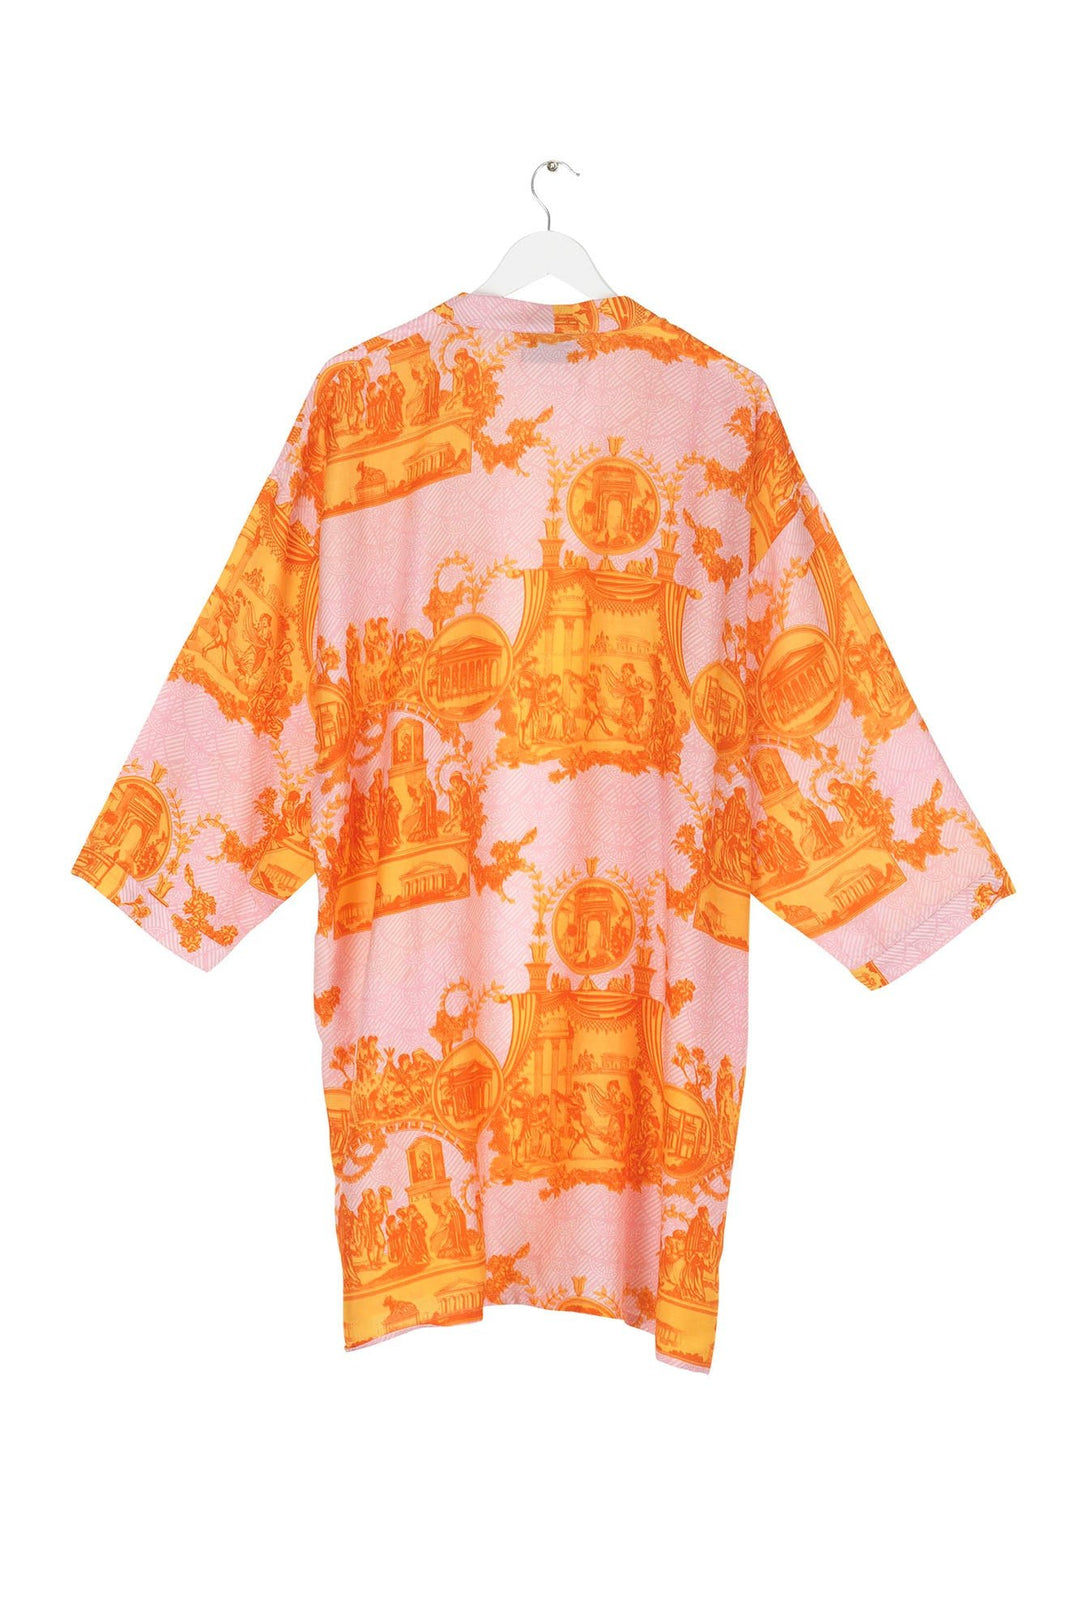 Ancient Columns Orange Collar Kimono - One Hundred Stars